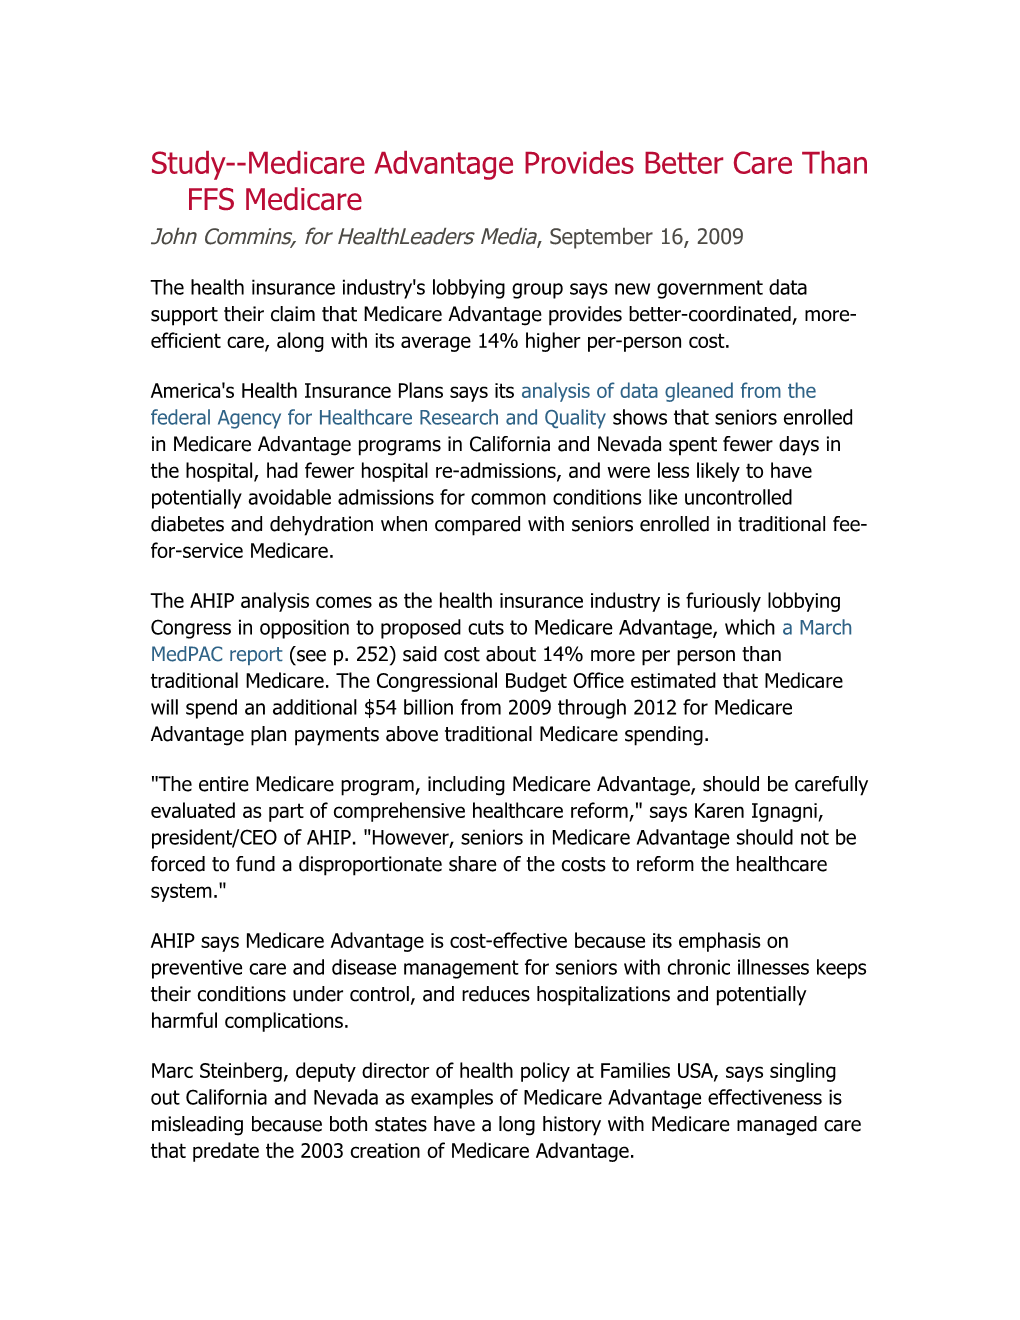 Study Medicare Advantage Provides Better Care Than FFS Medicare